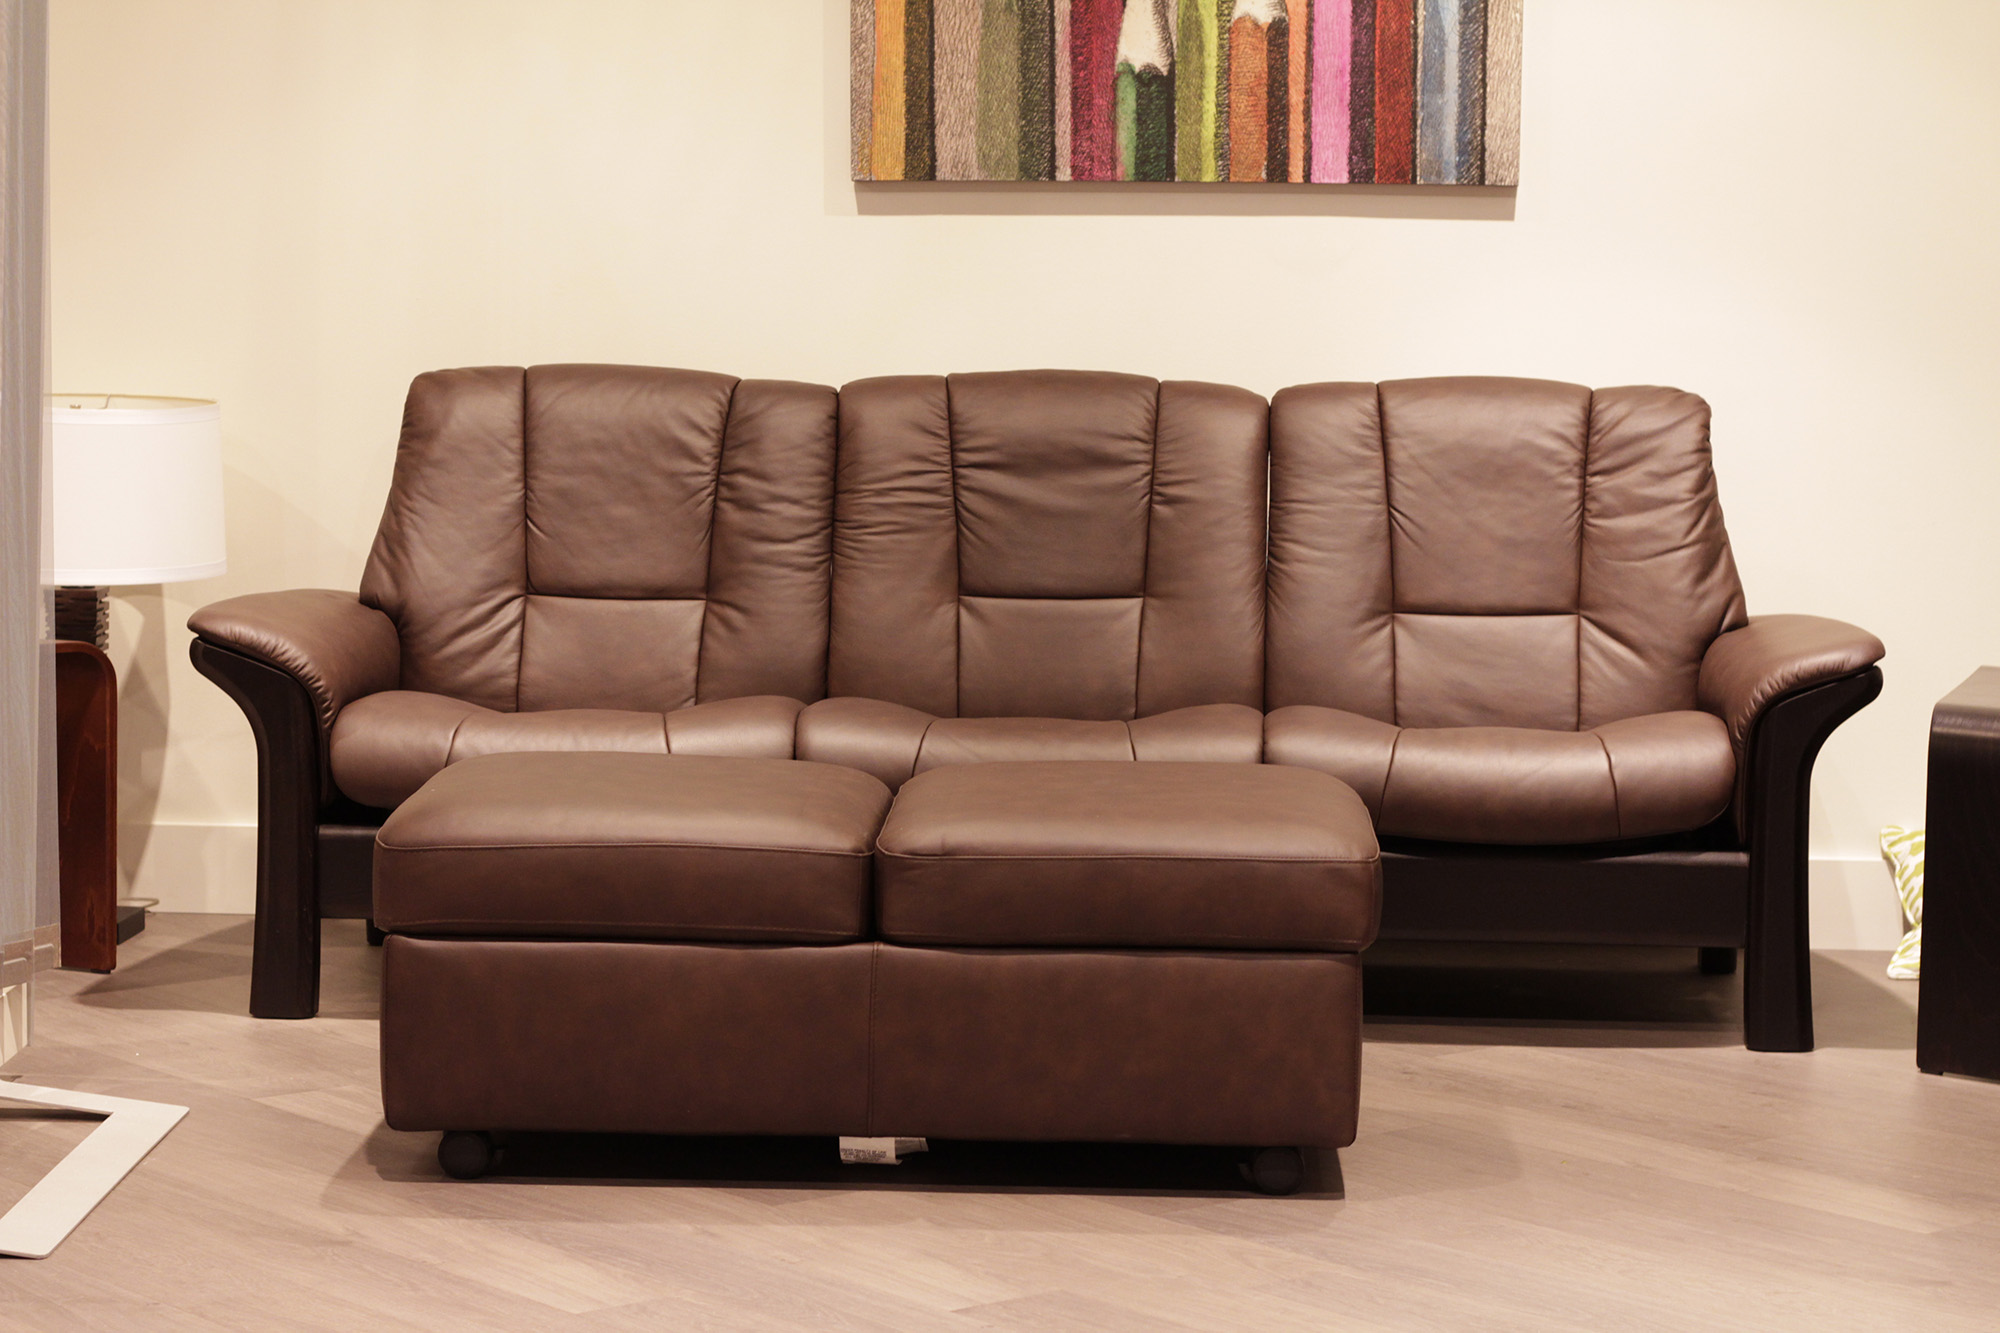 stressless sapphire leather reclining sofa